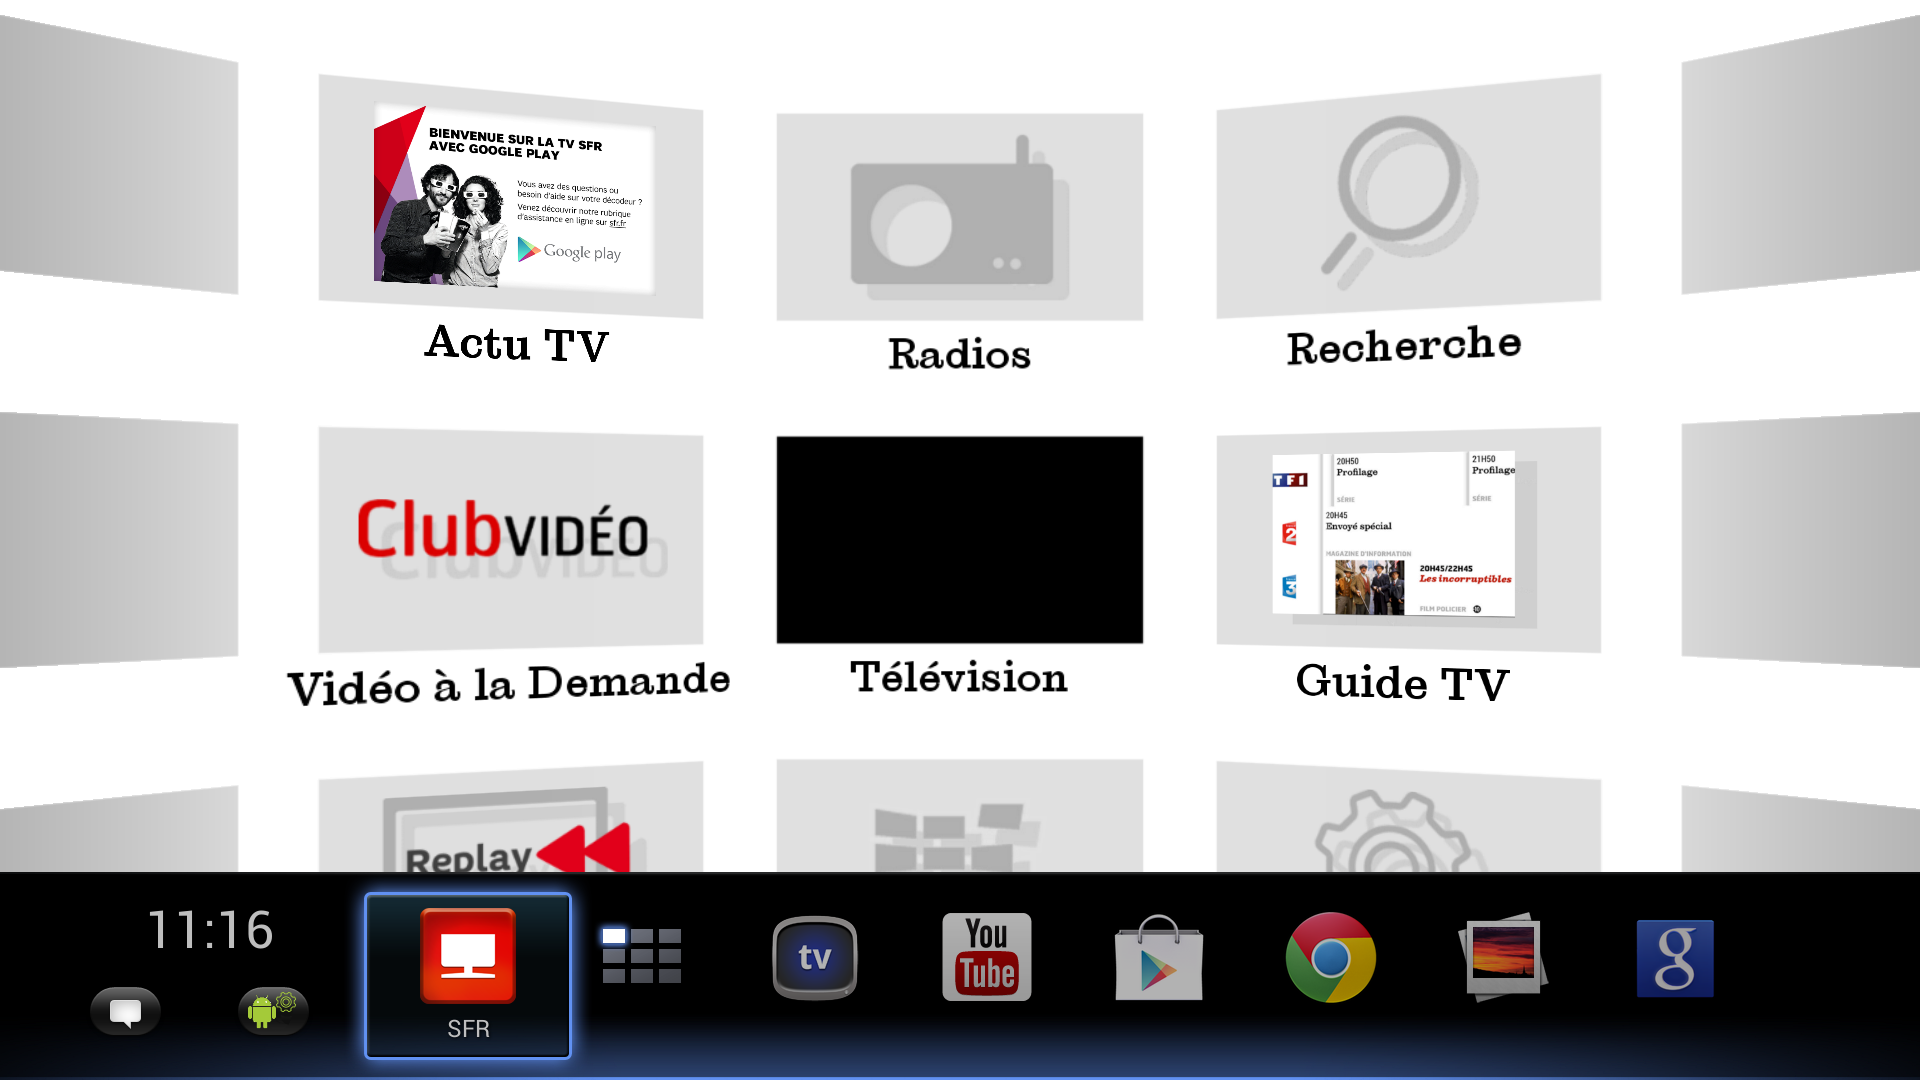 Гугл тв каналов. Телевизоры SFR. Google Play установить на ПК. Обои для андроид ТВ приставки. TV Guide.